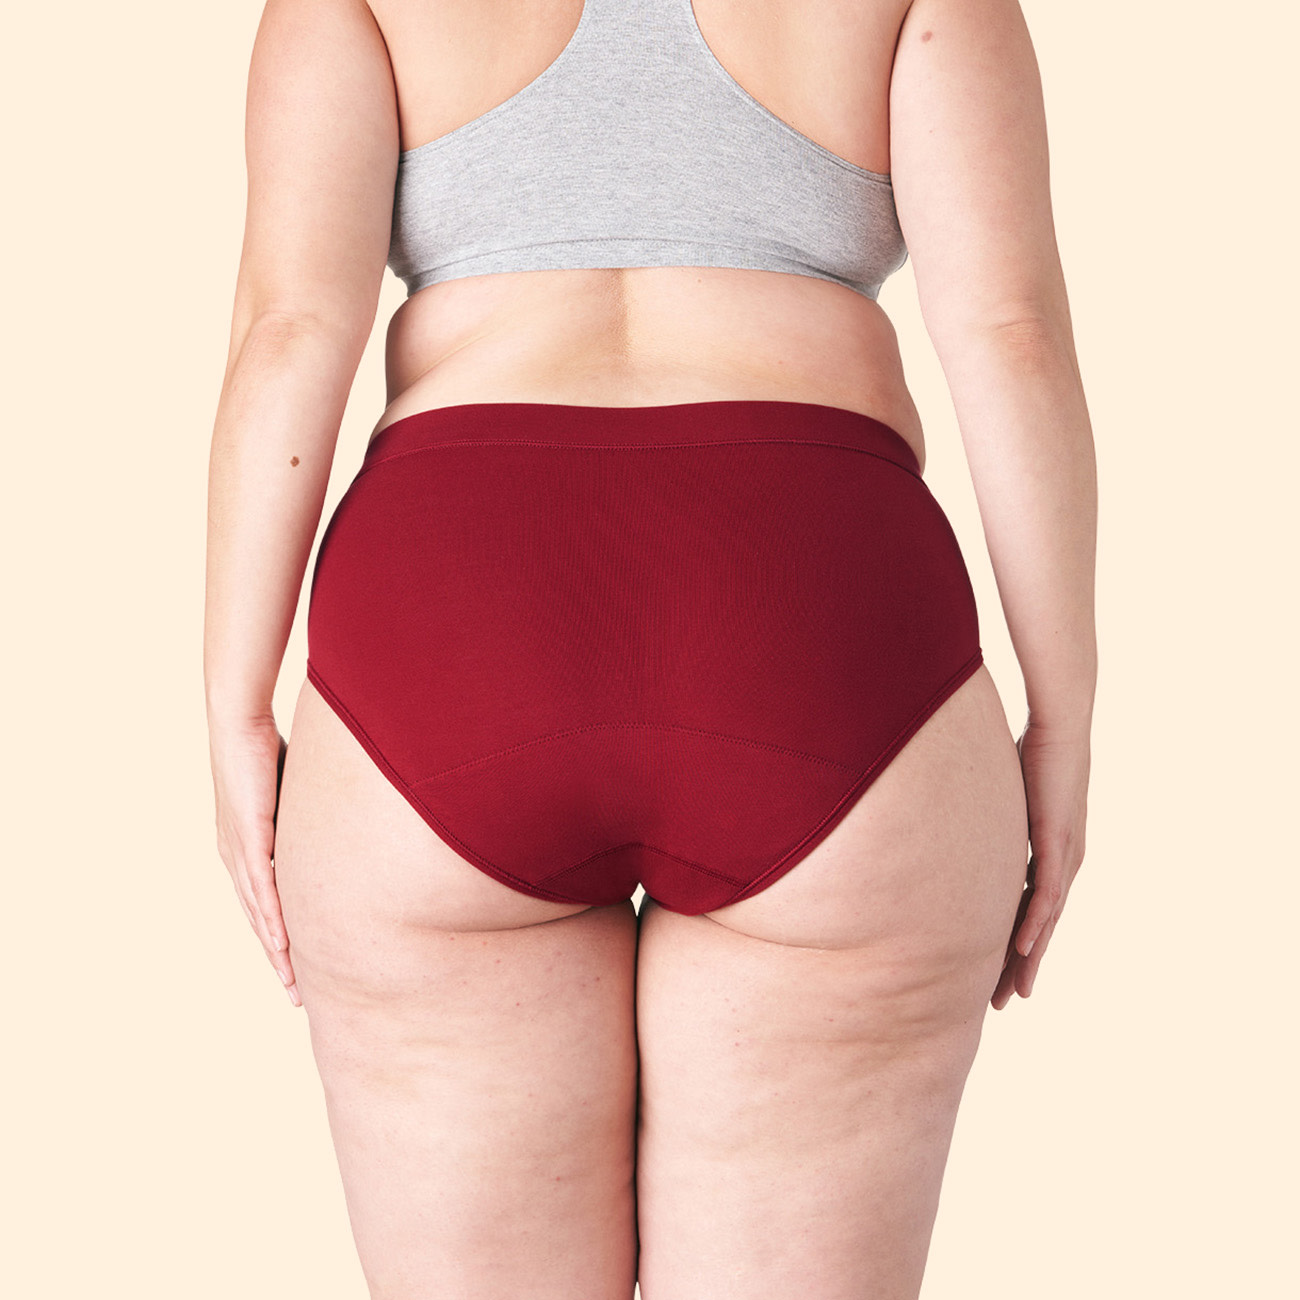 Thinx for All™ Women's Bikini Period Underwear, Super Absorbency, Rhubarb  Red 